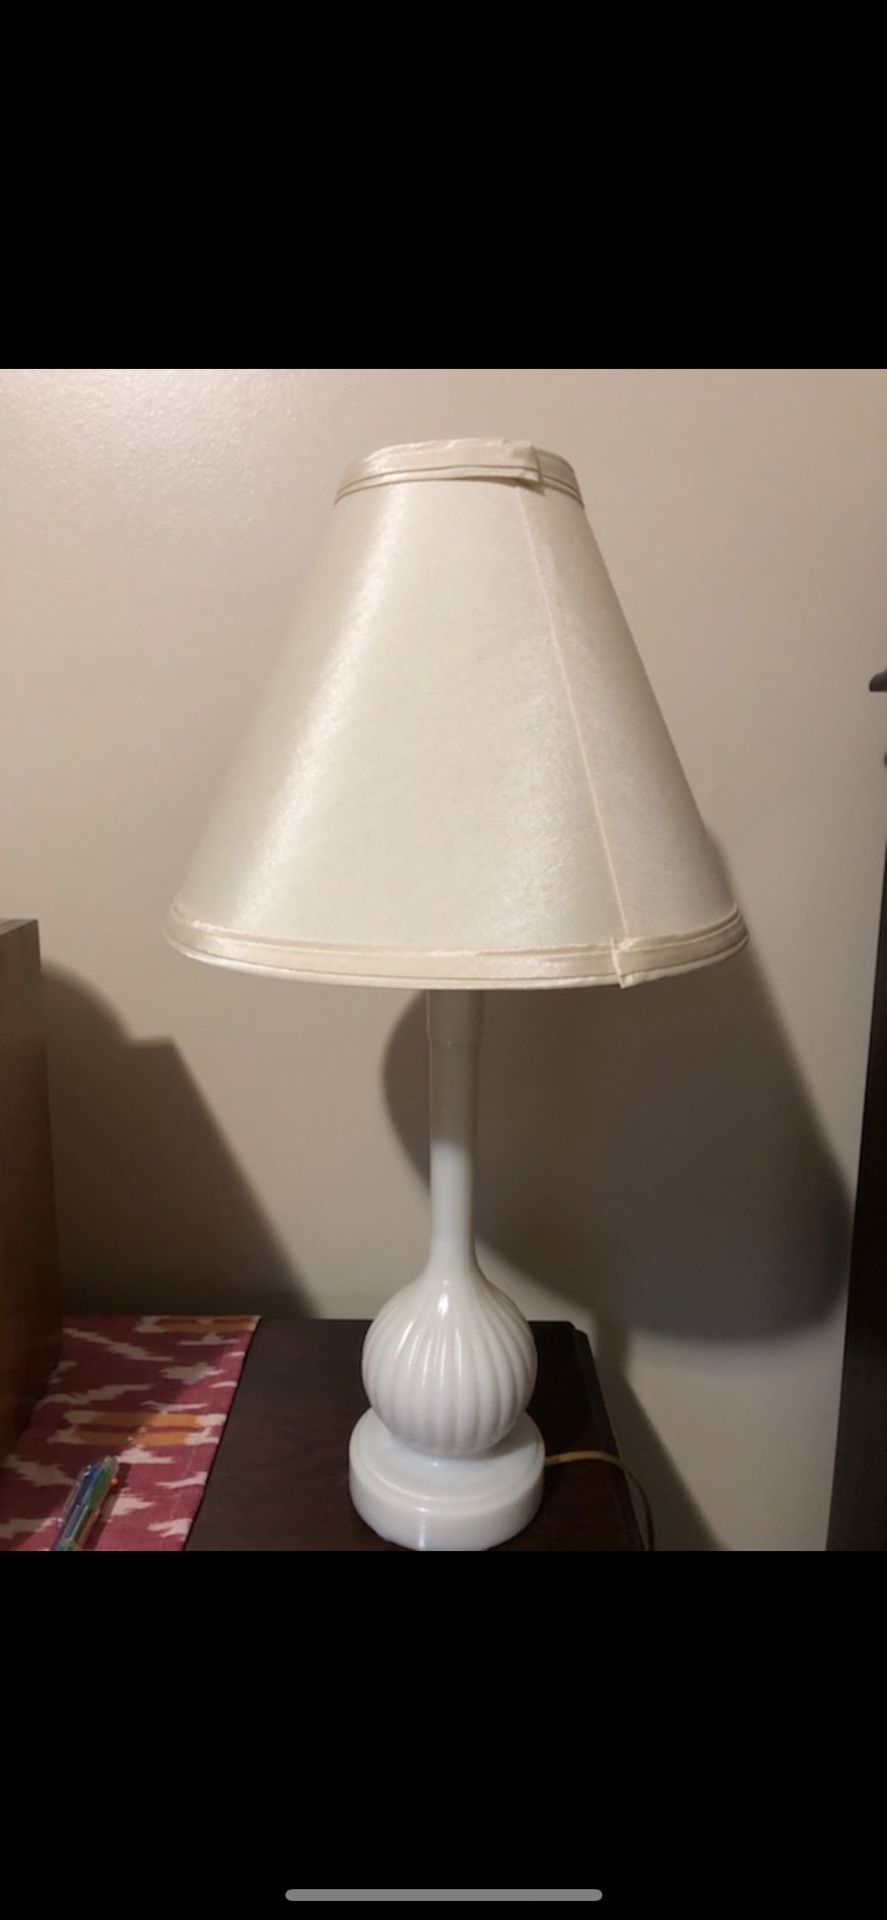 Tabletop lamp, set of 2